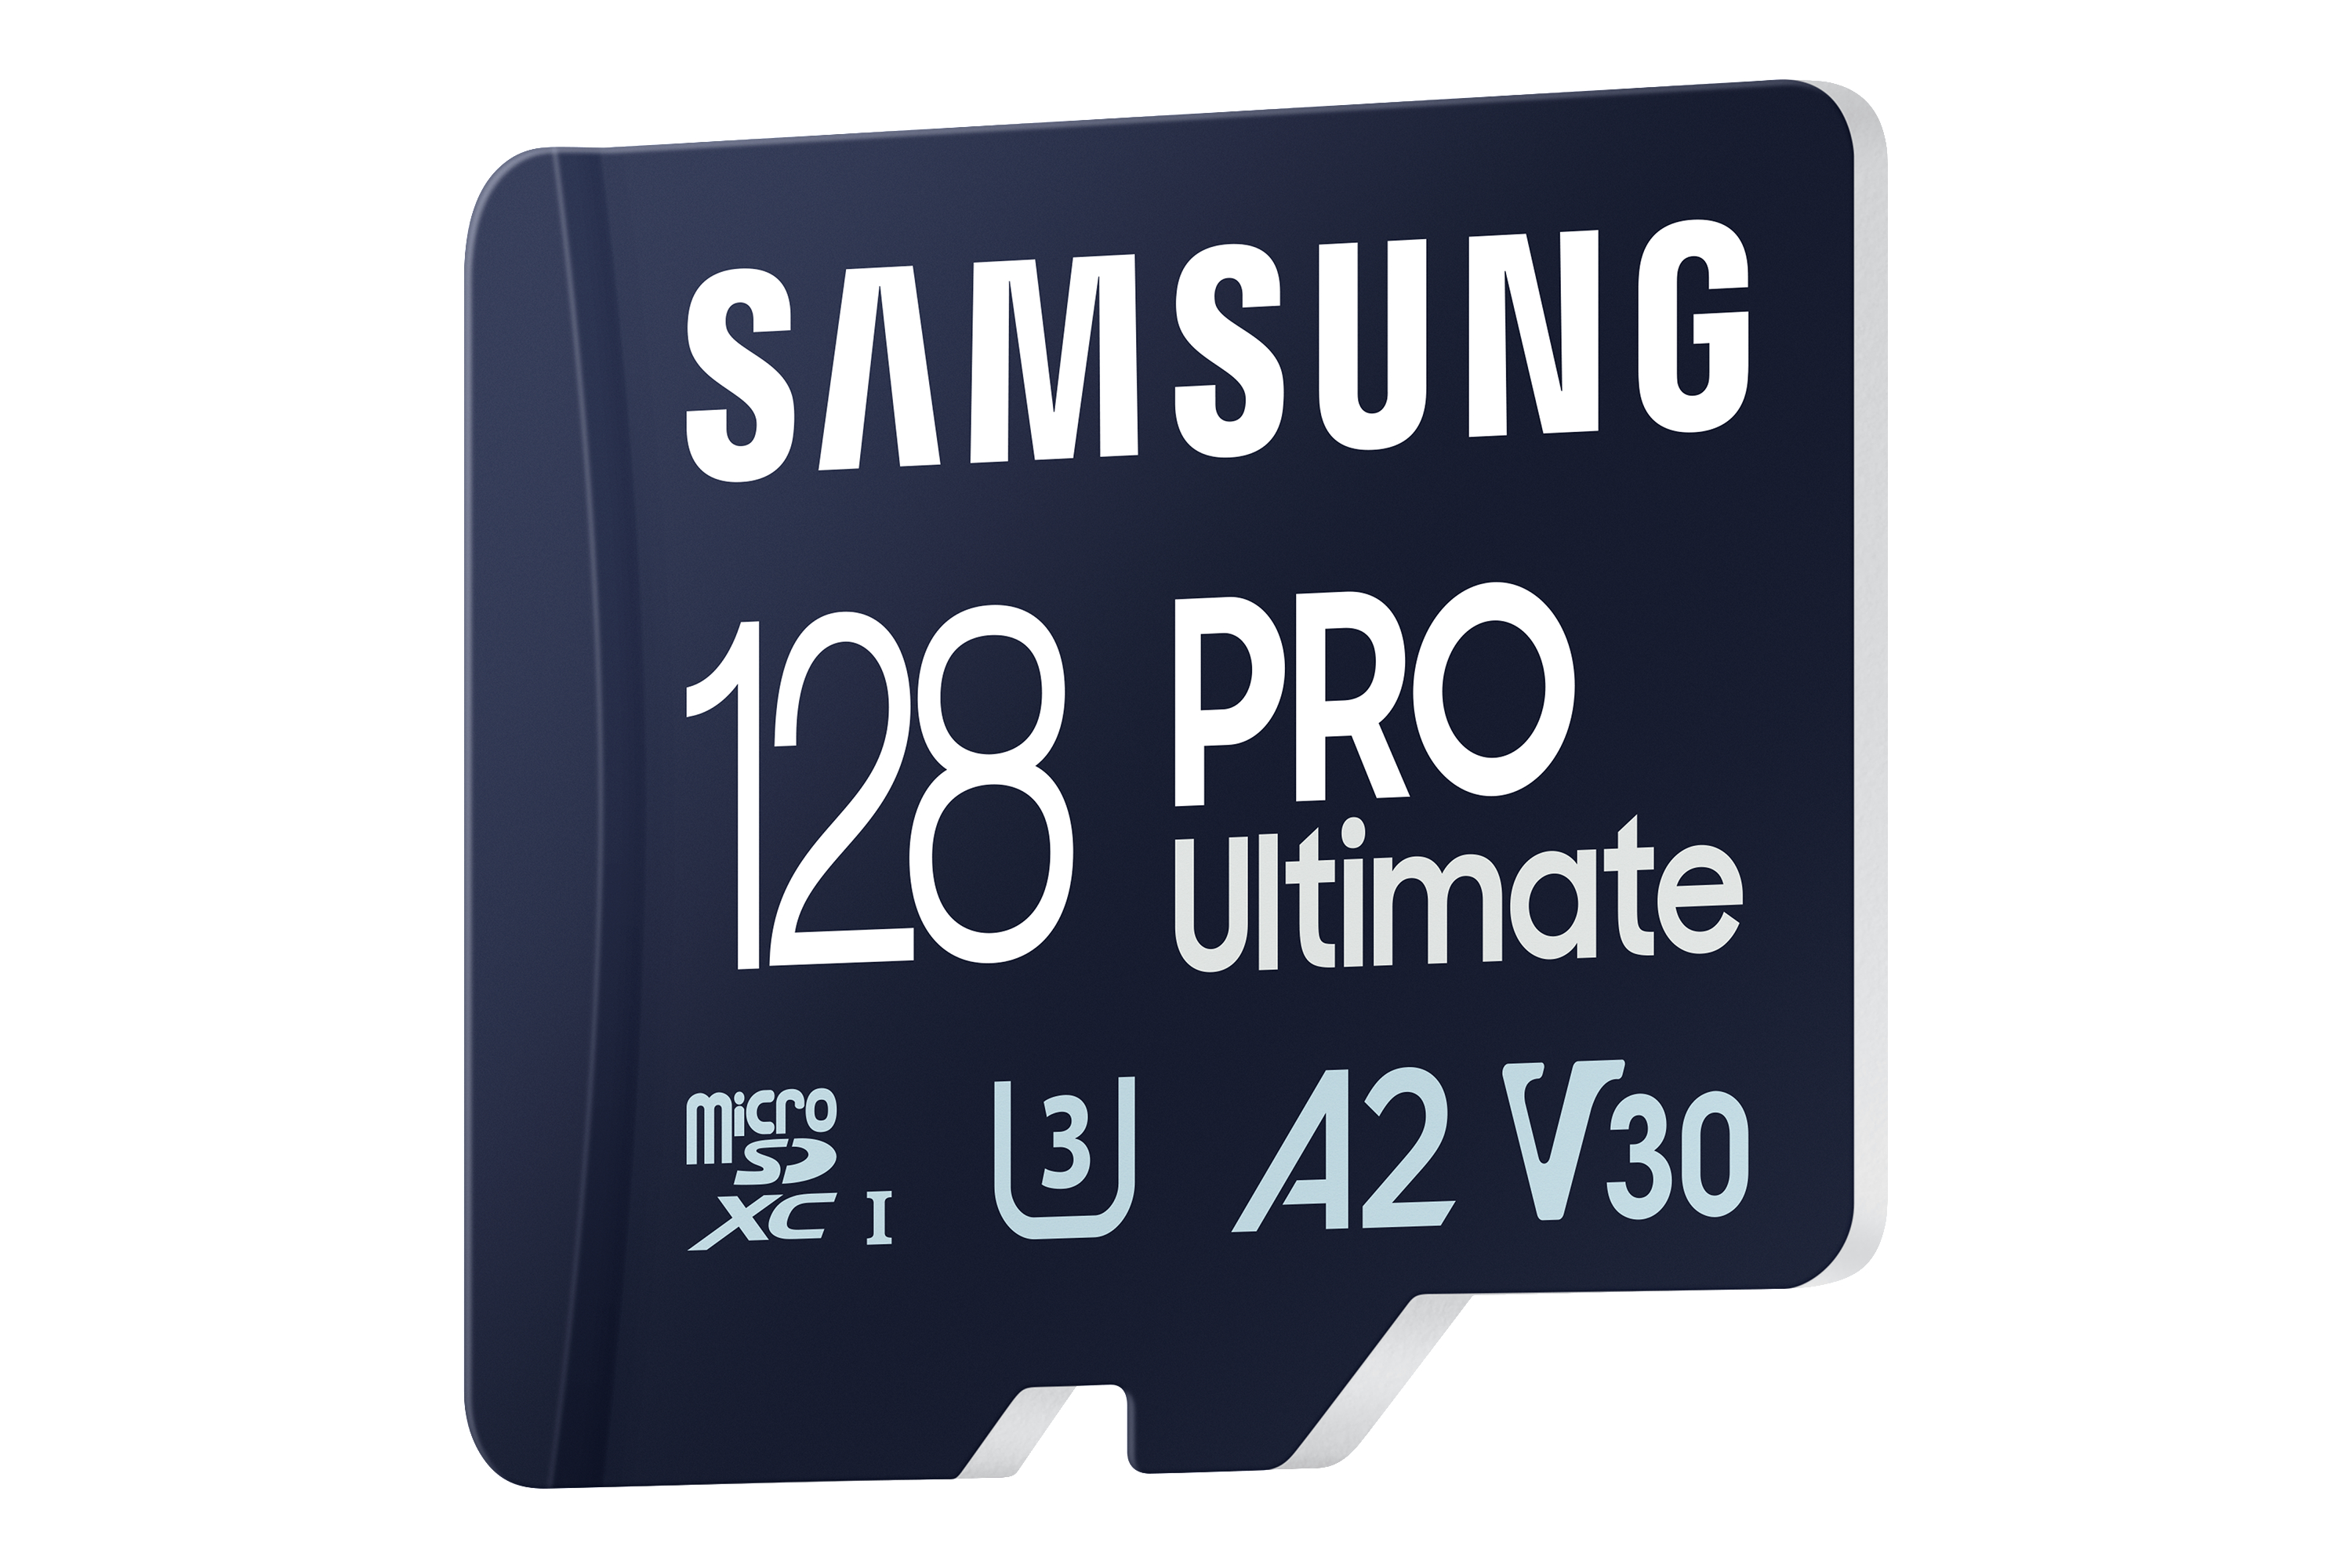 SAMSUNG PRO Ultimate, 128 Micro-SD MB/s 200 GB, Speicherkarte